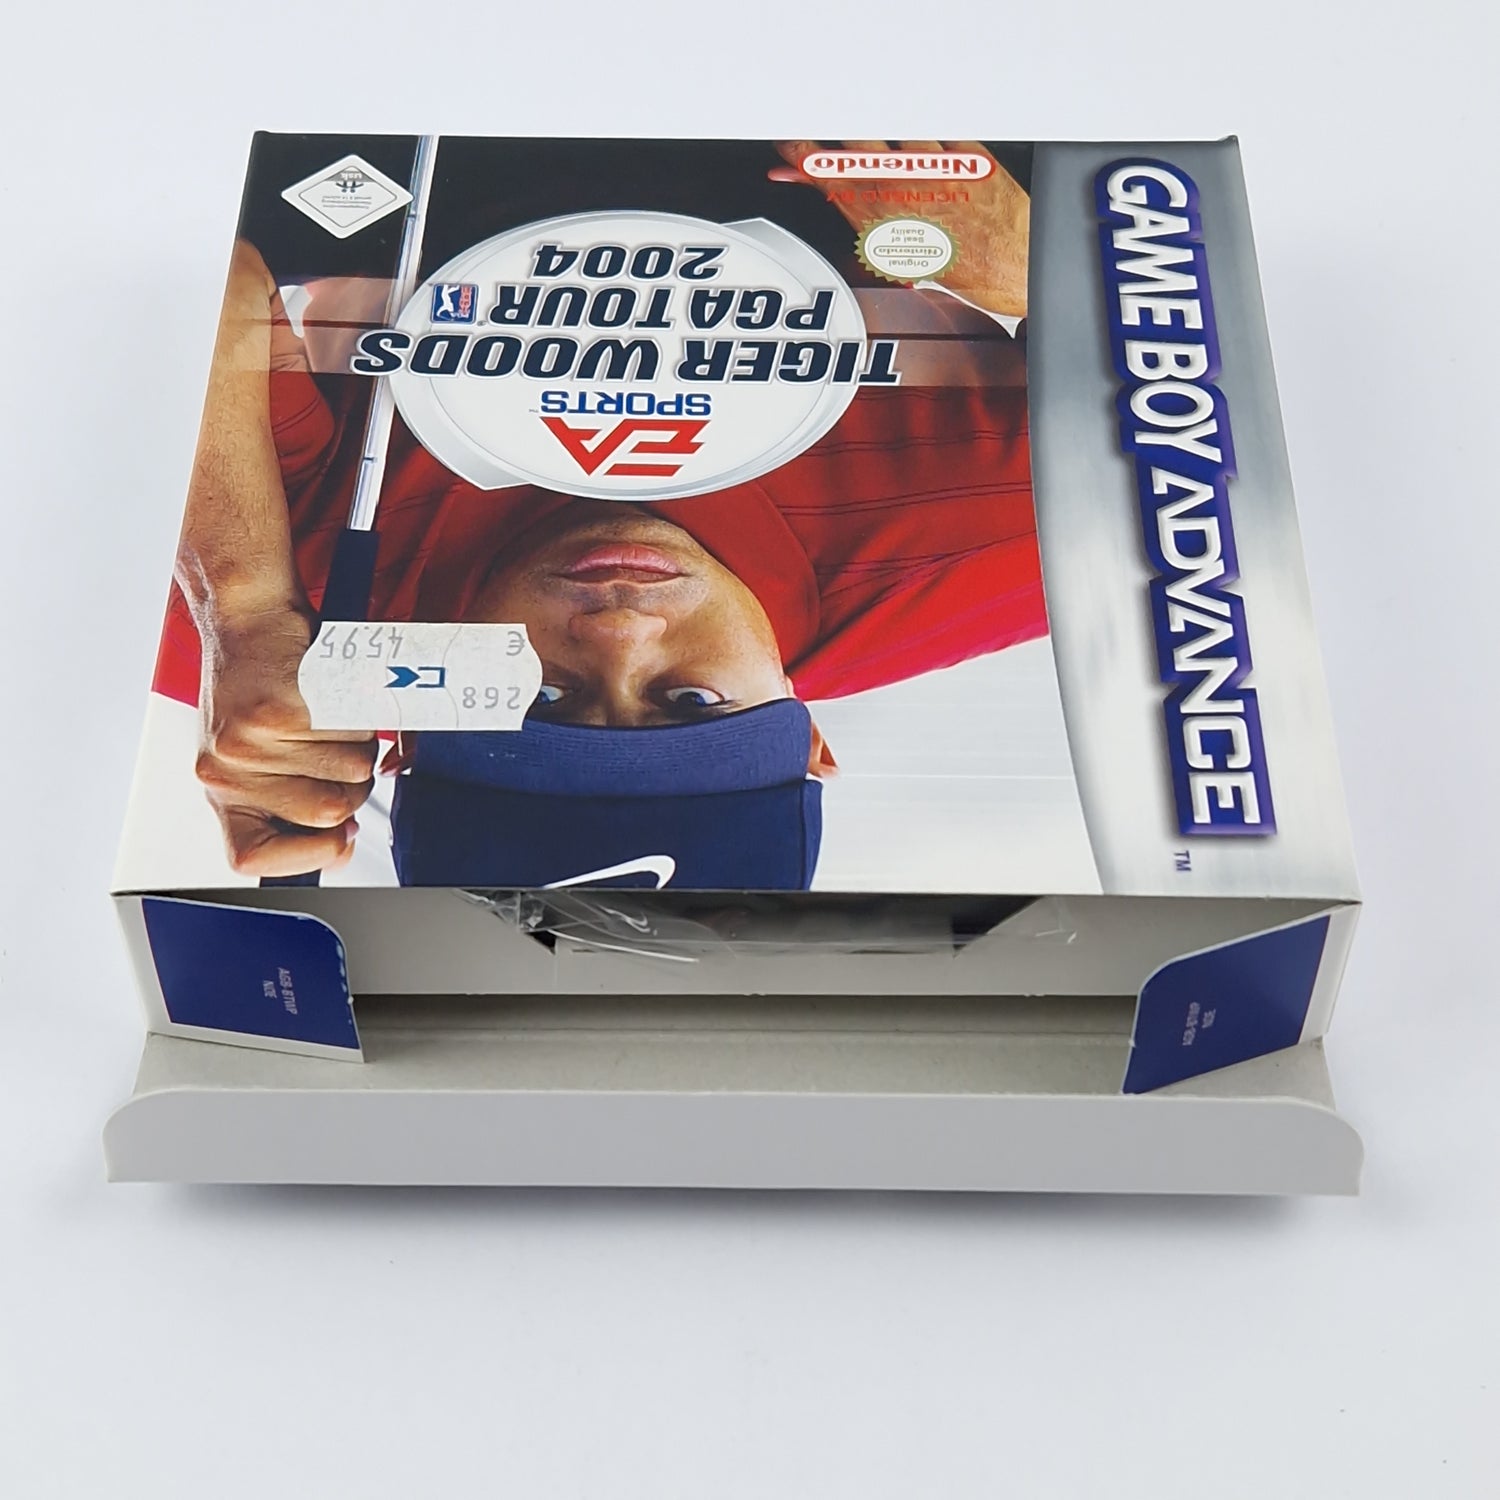 Nintendo Game Boy Advance Spiel : Tiger Woods PGA Tour 2004 OVP Anleitung Modul